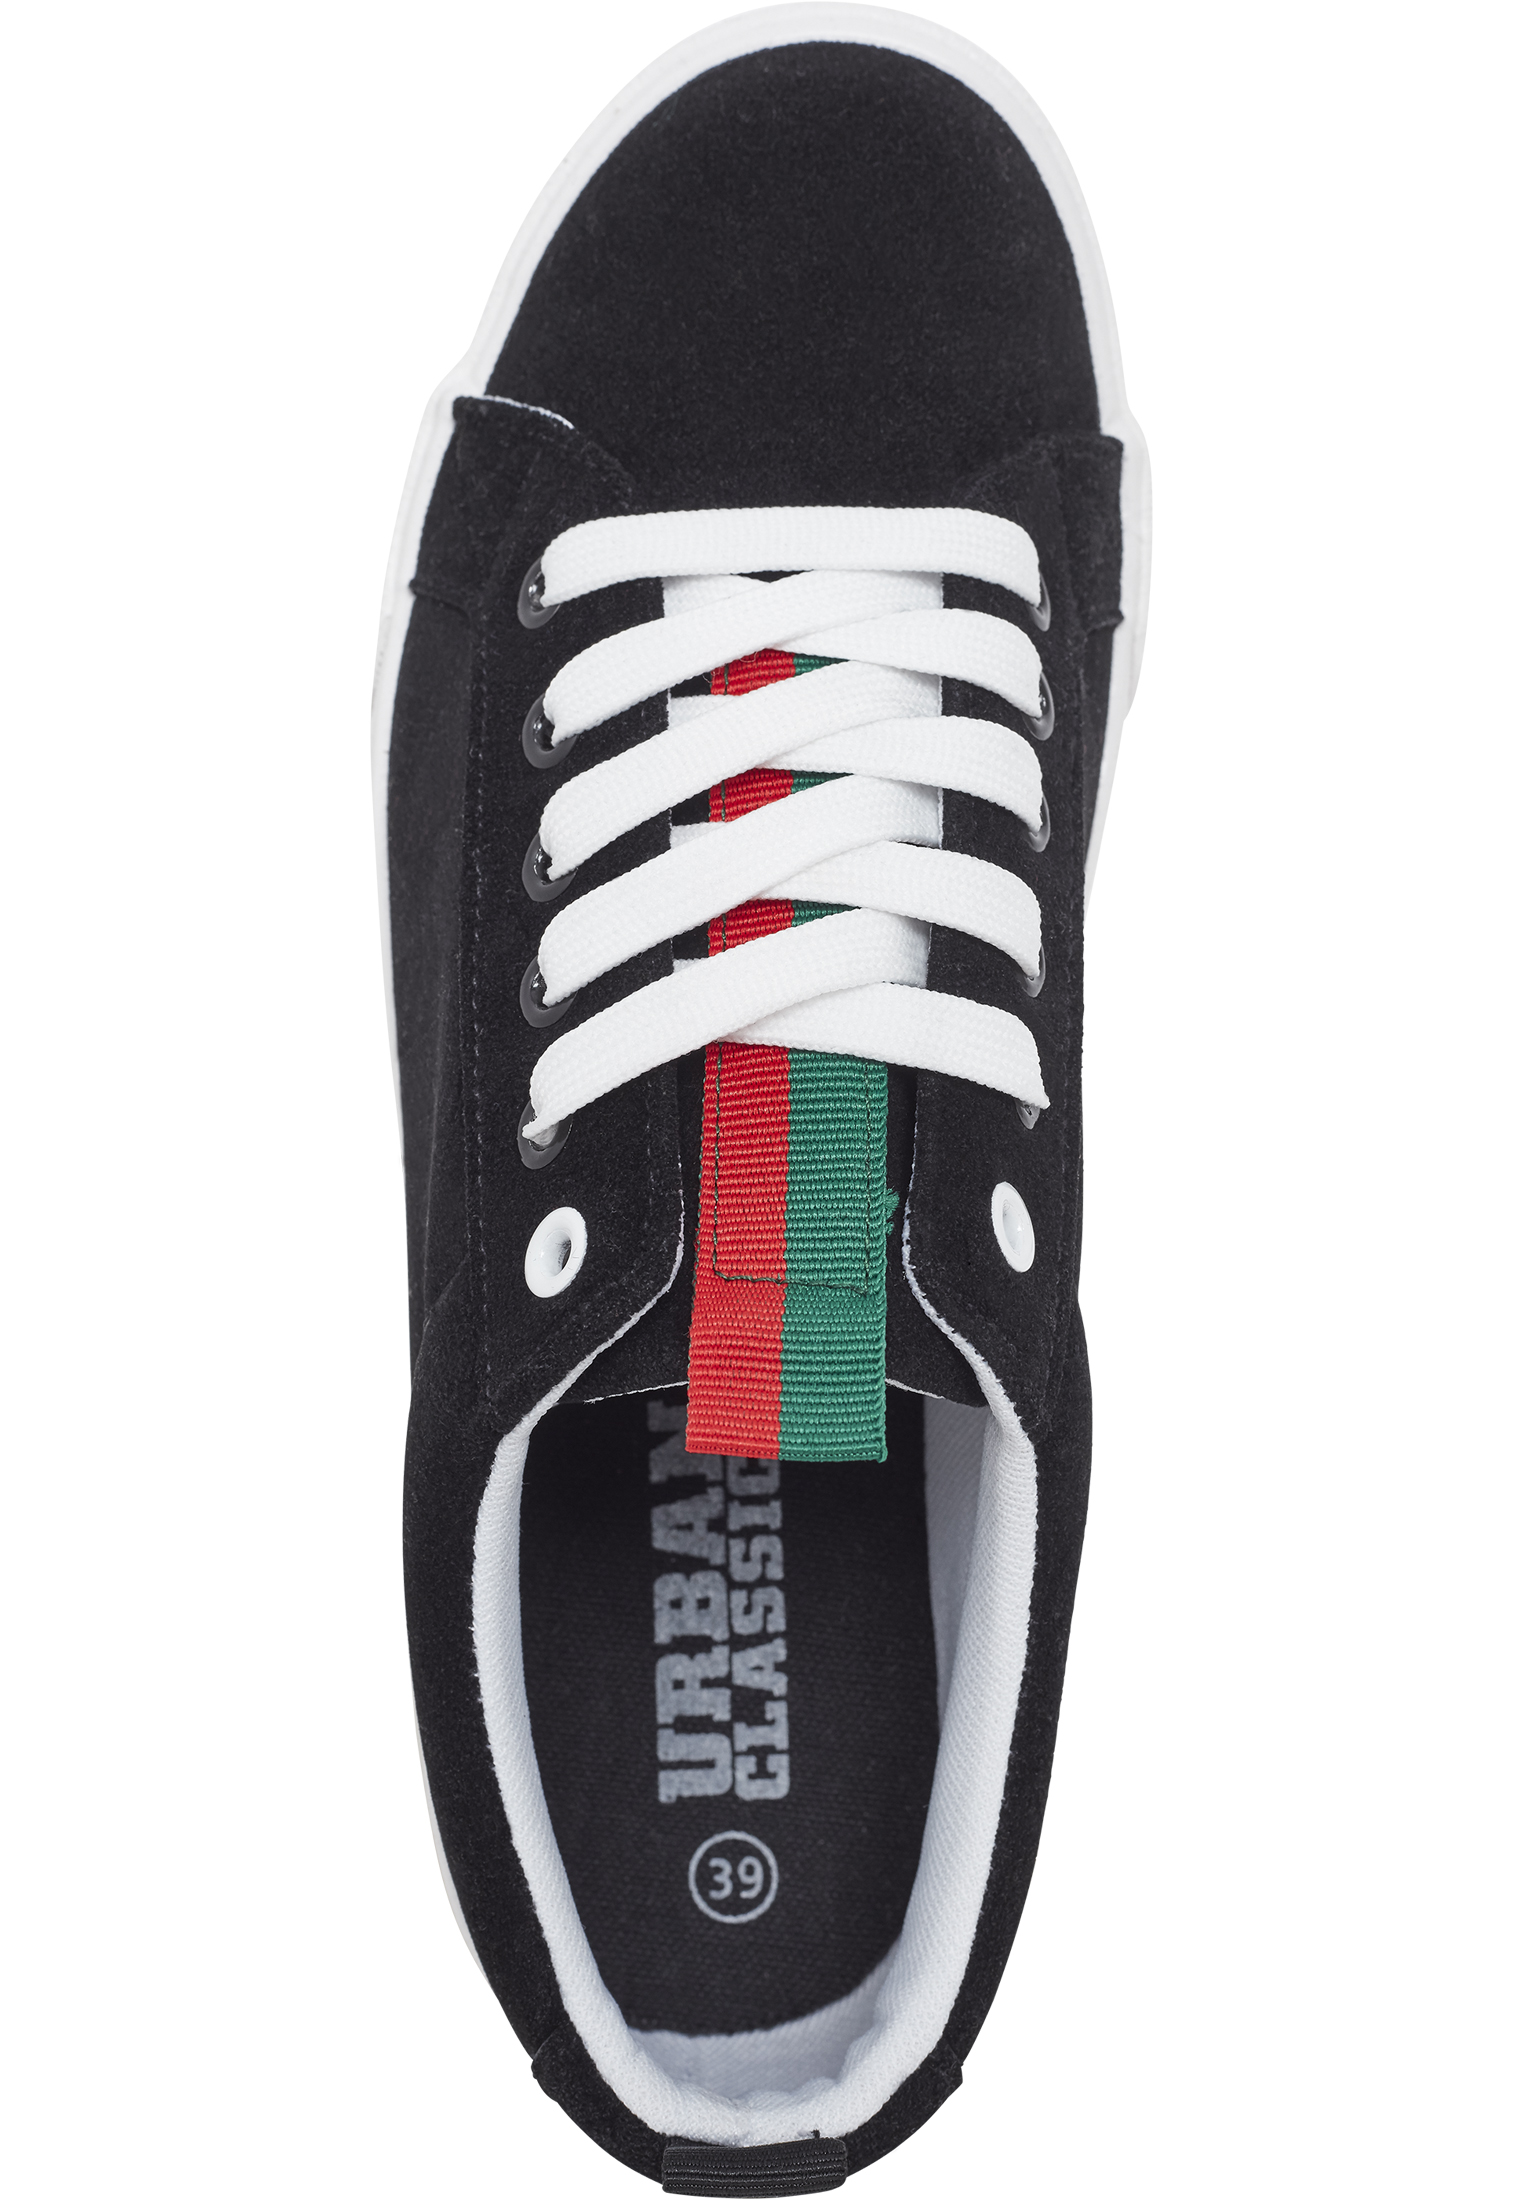 Schuhe Velour Sneaker in Farbe blk/stripes